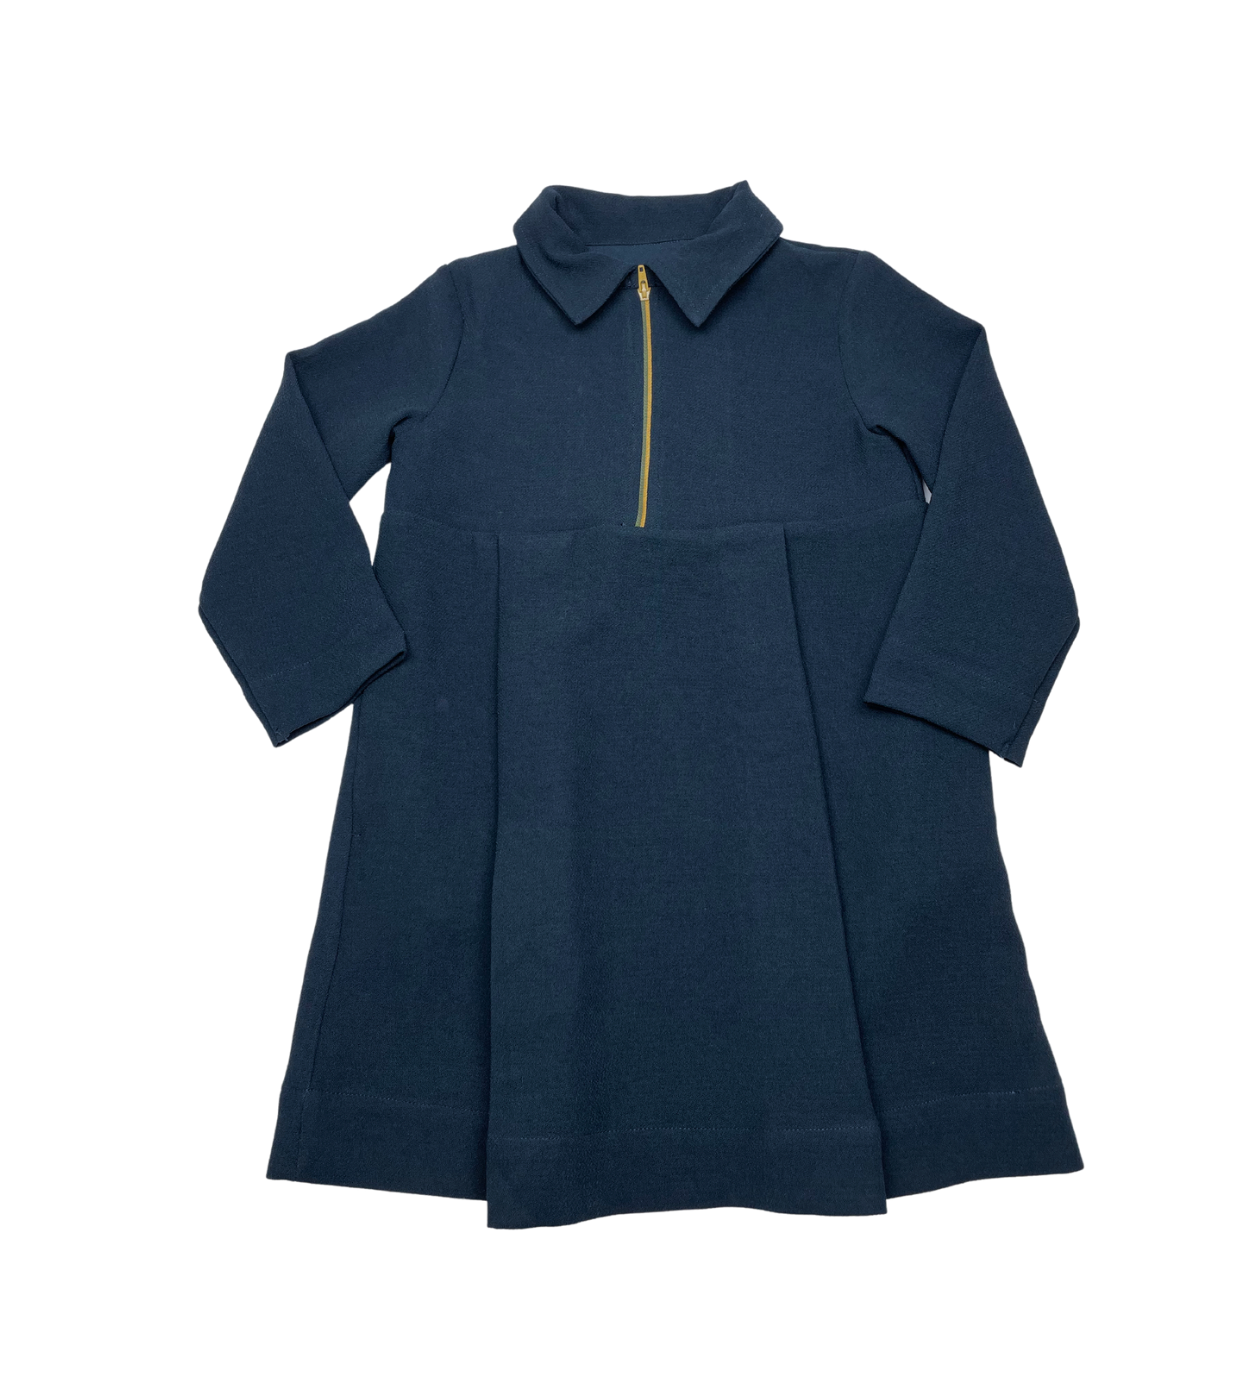 BELLEROSE - Robe bleue marine à poches - 6 ans